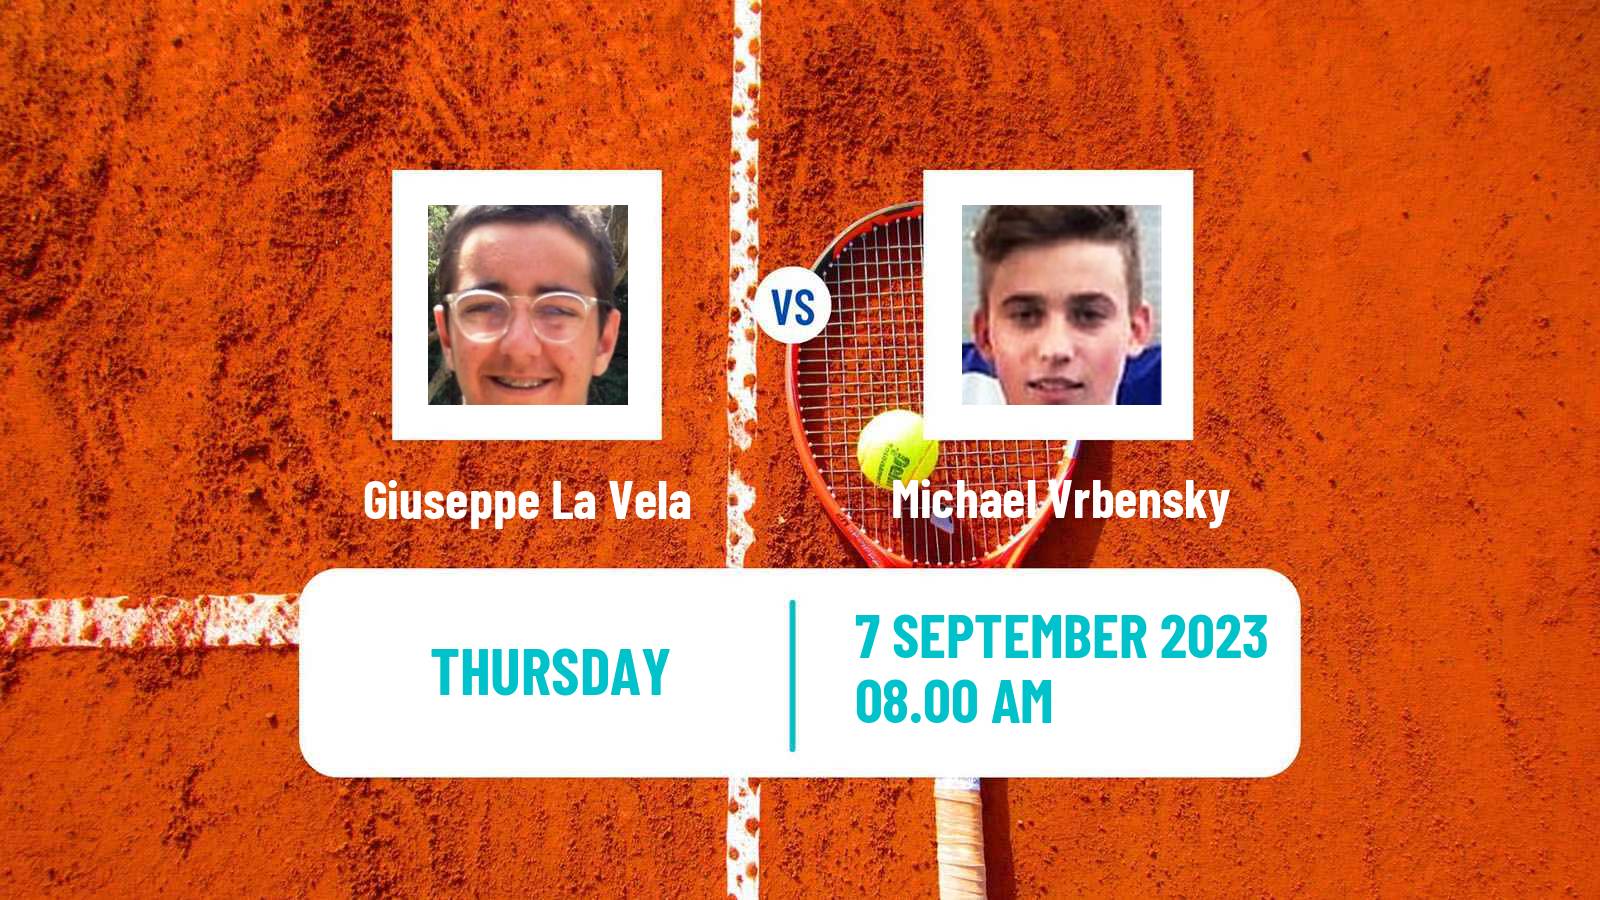 Tennis ITF M25 MarIBOr 2 Men Giuseppe La Vela - Michael Vrbensky